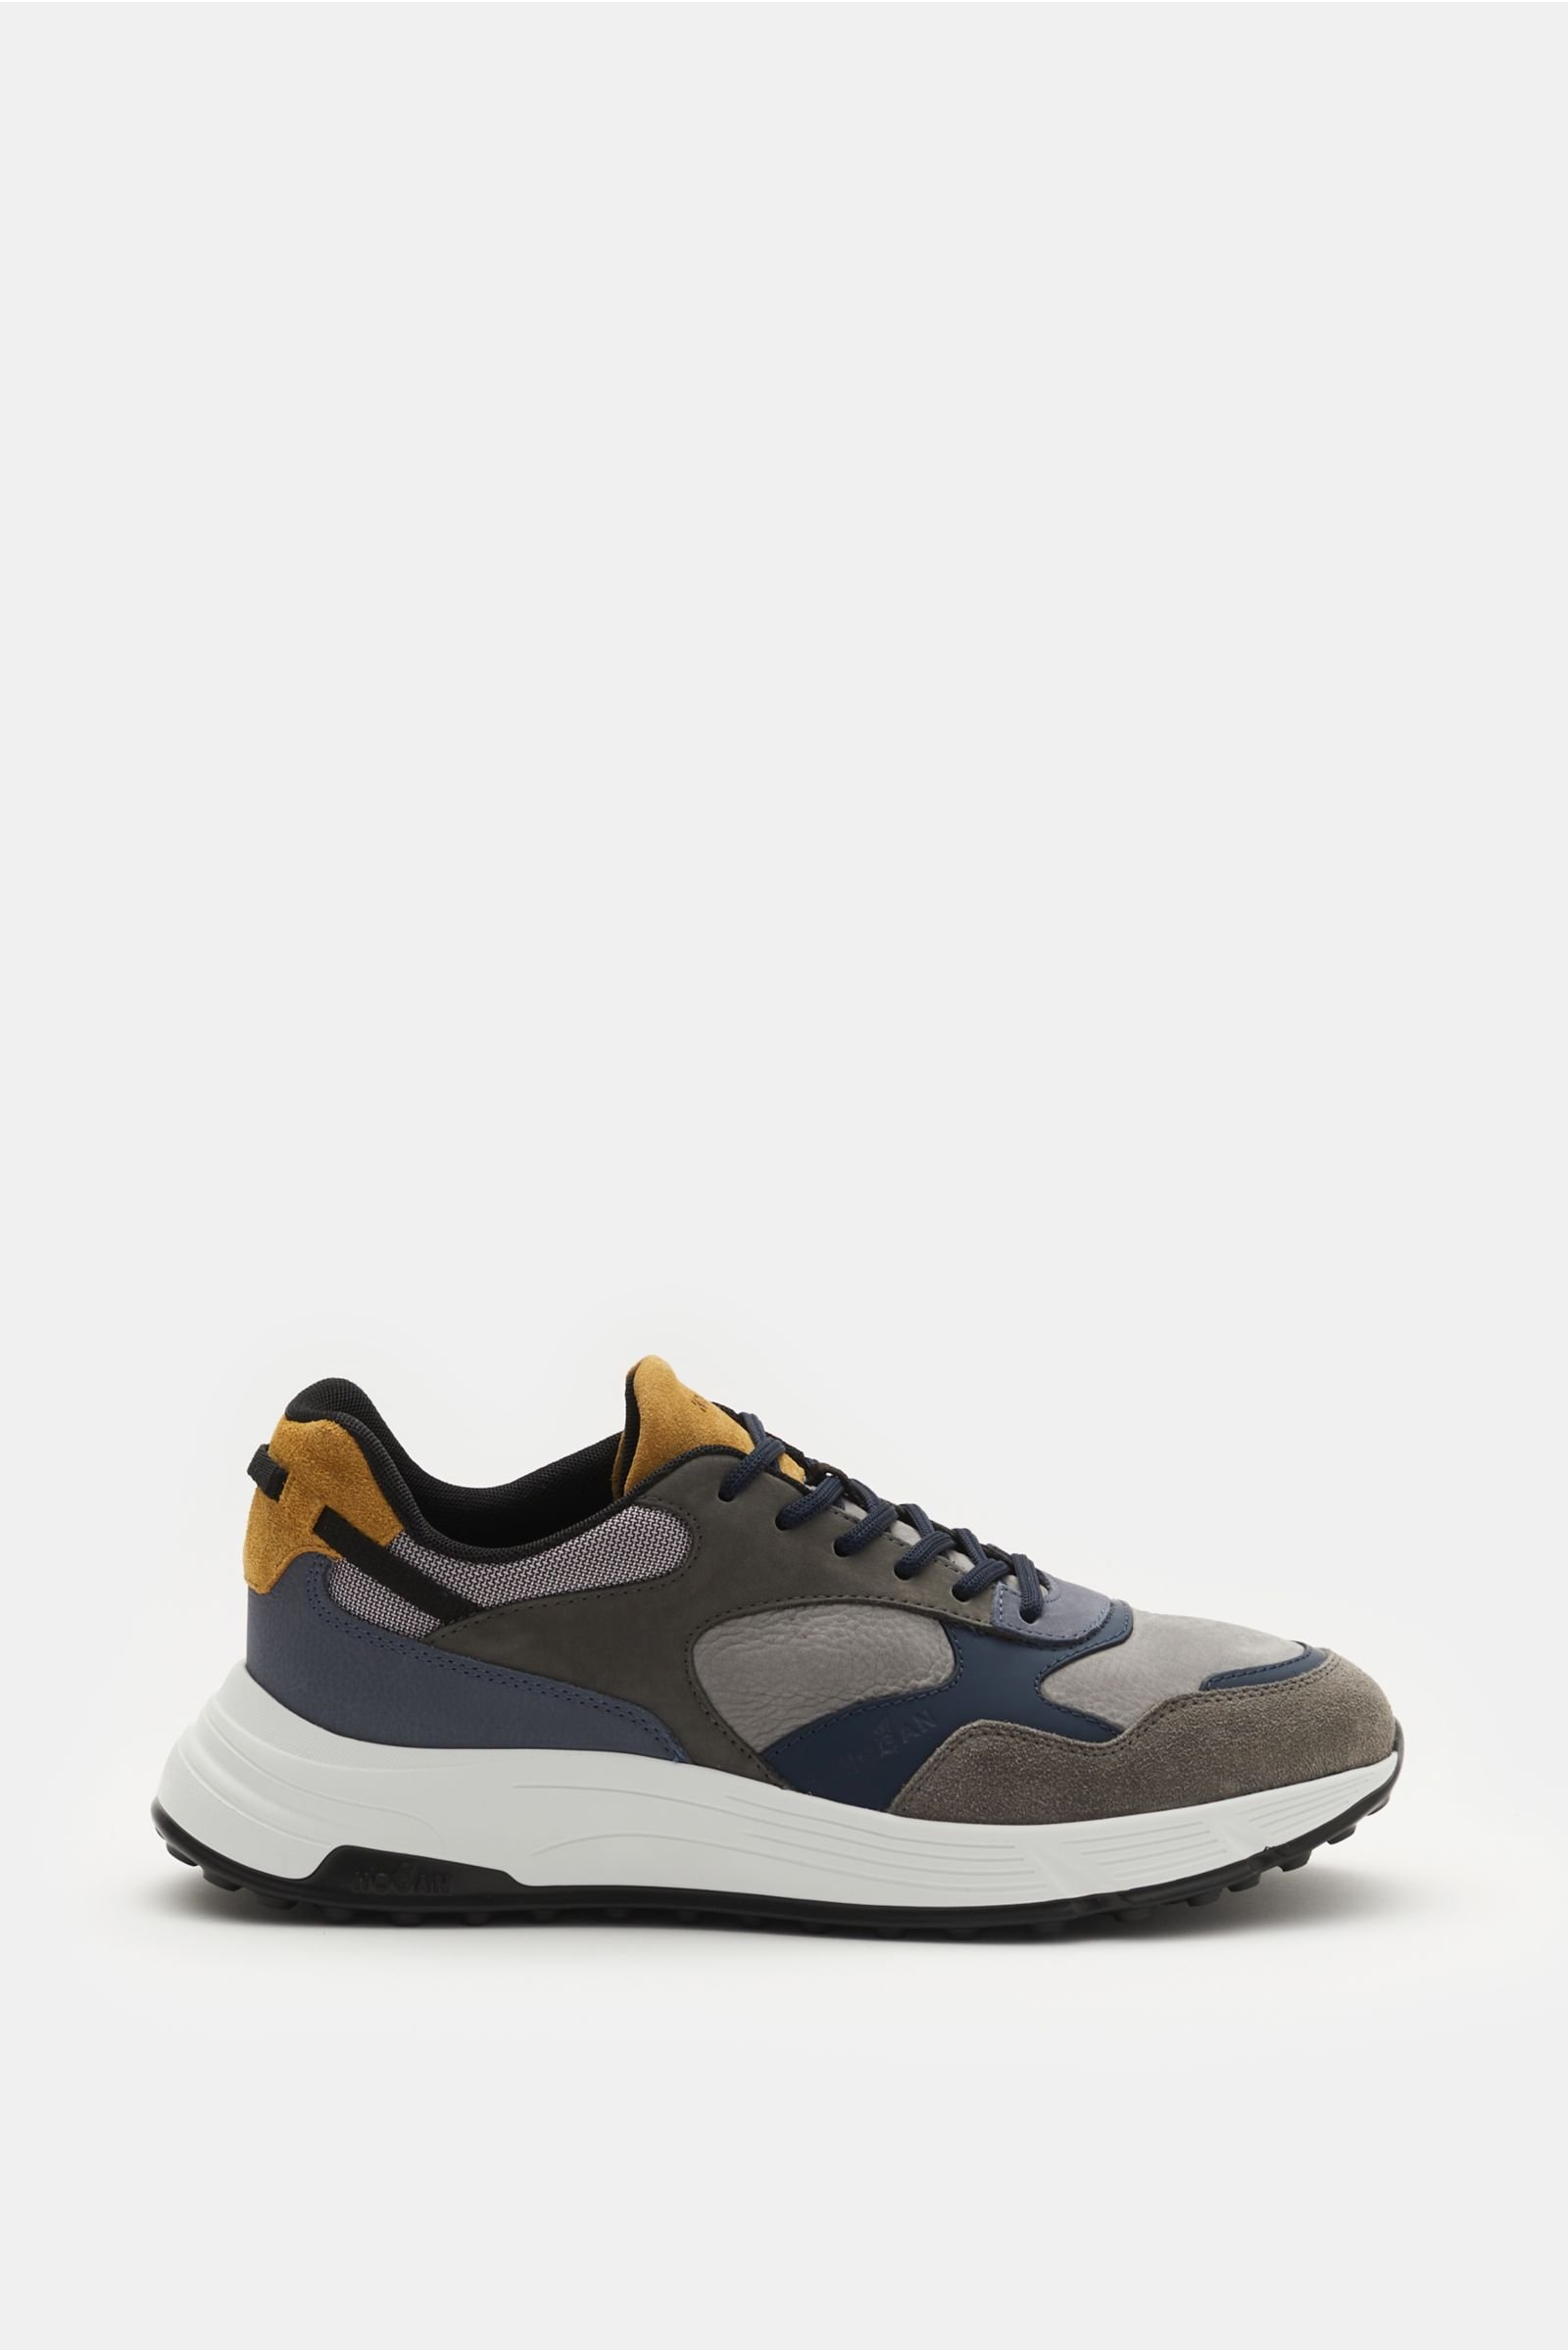 Sneakers 'Hogan Hyperlight' grey/yellow/grey-blue